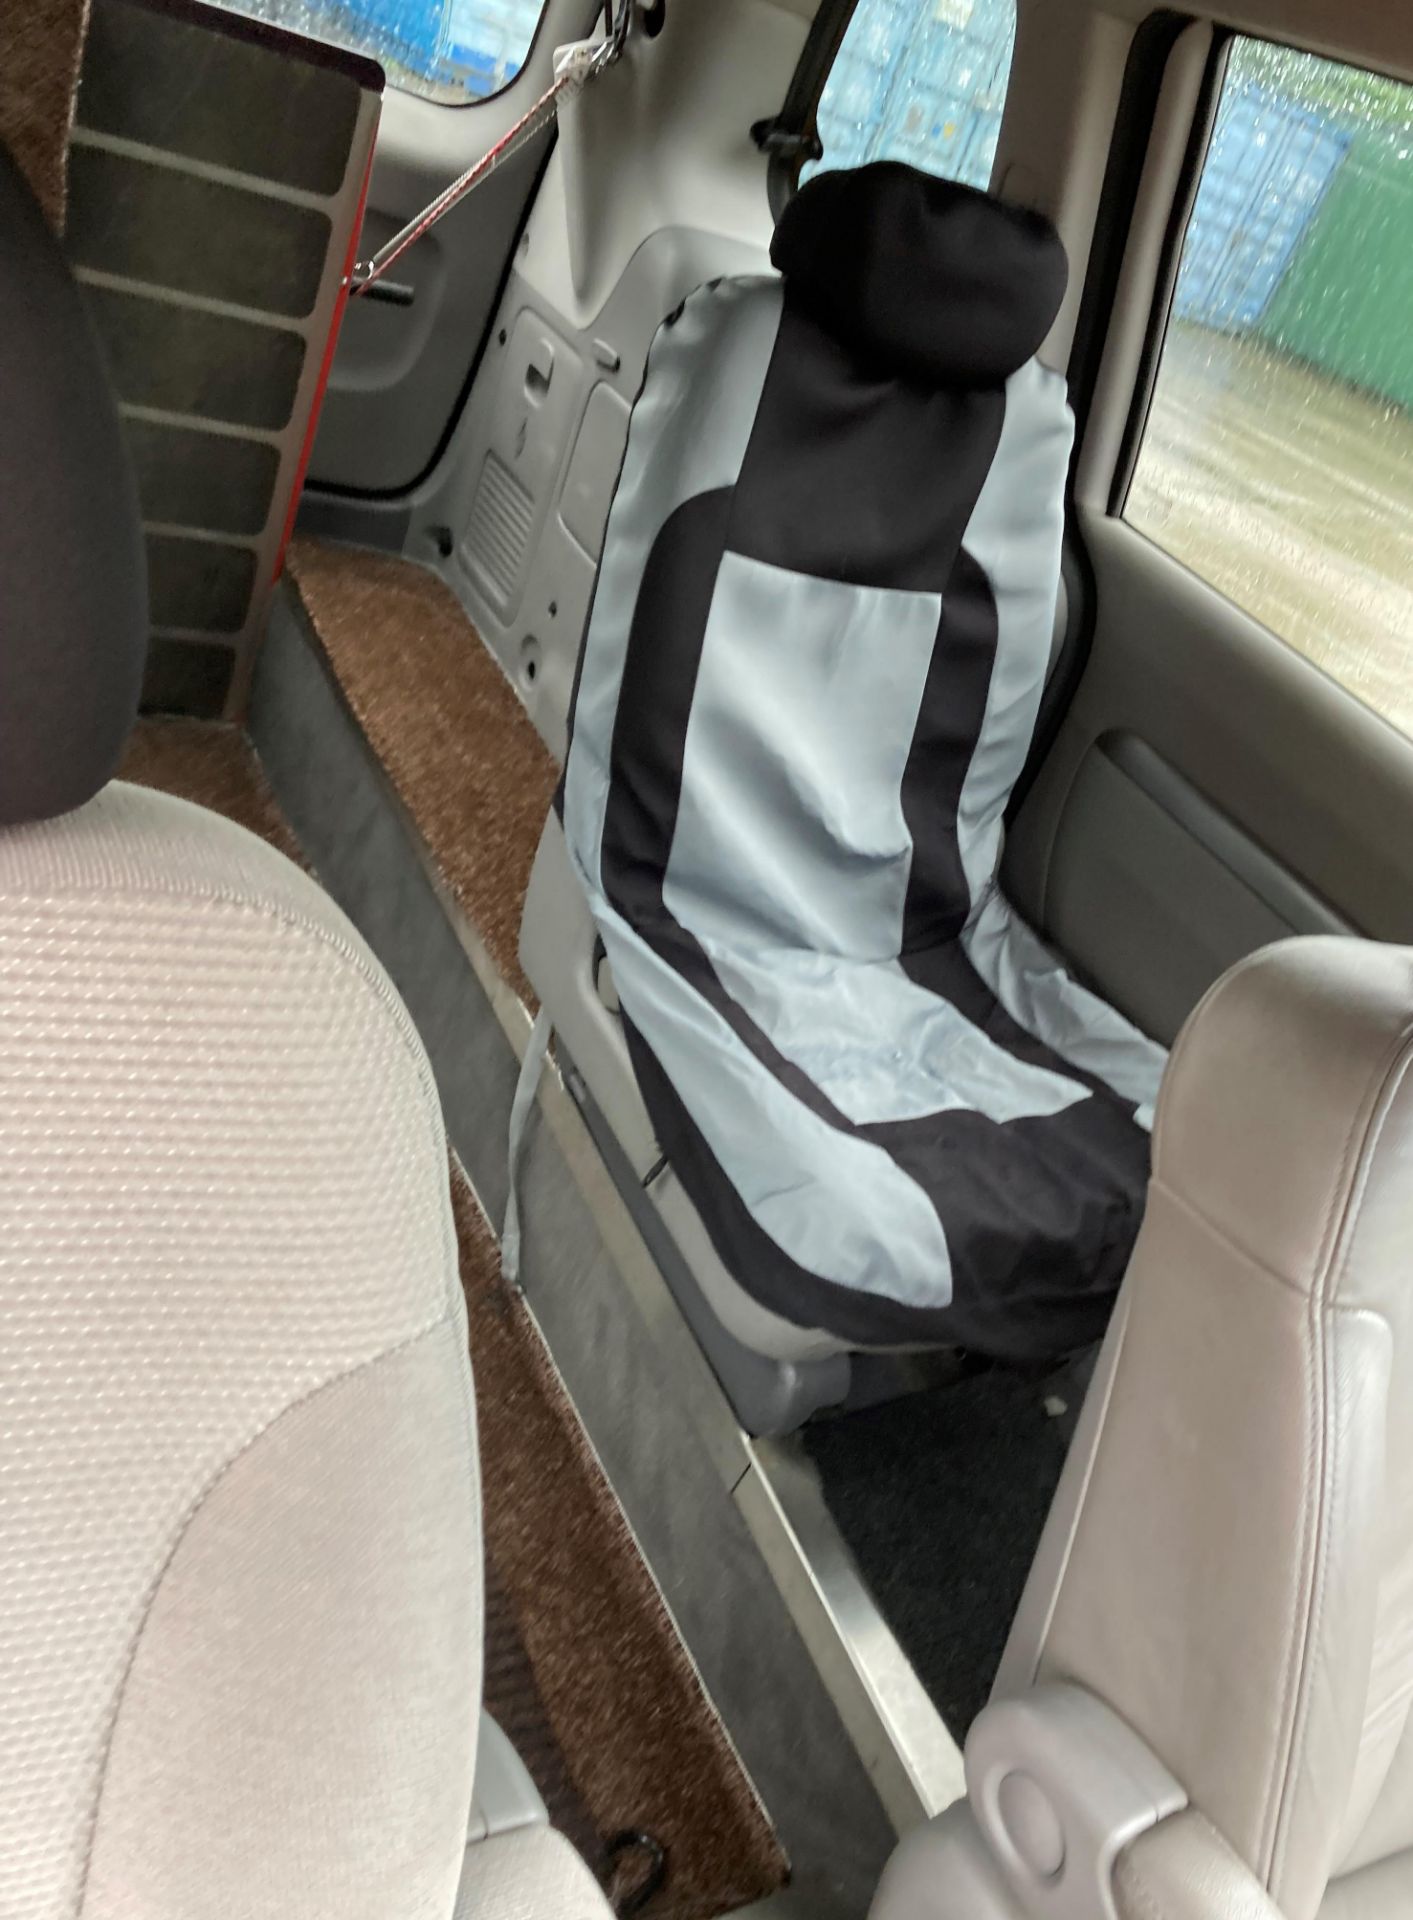 KIA SEDONA 3 CRDi AUTO MPV - Diesel - Black - Passenger seat dark grey leather, - Image 15 of 22